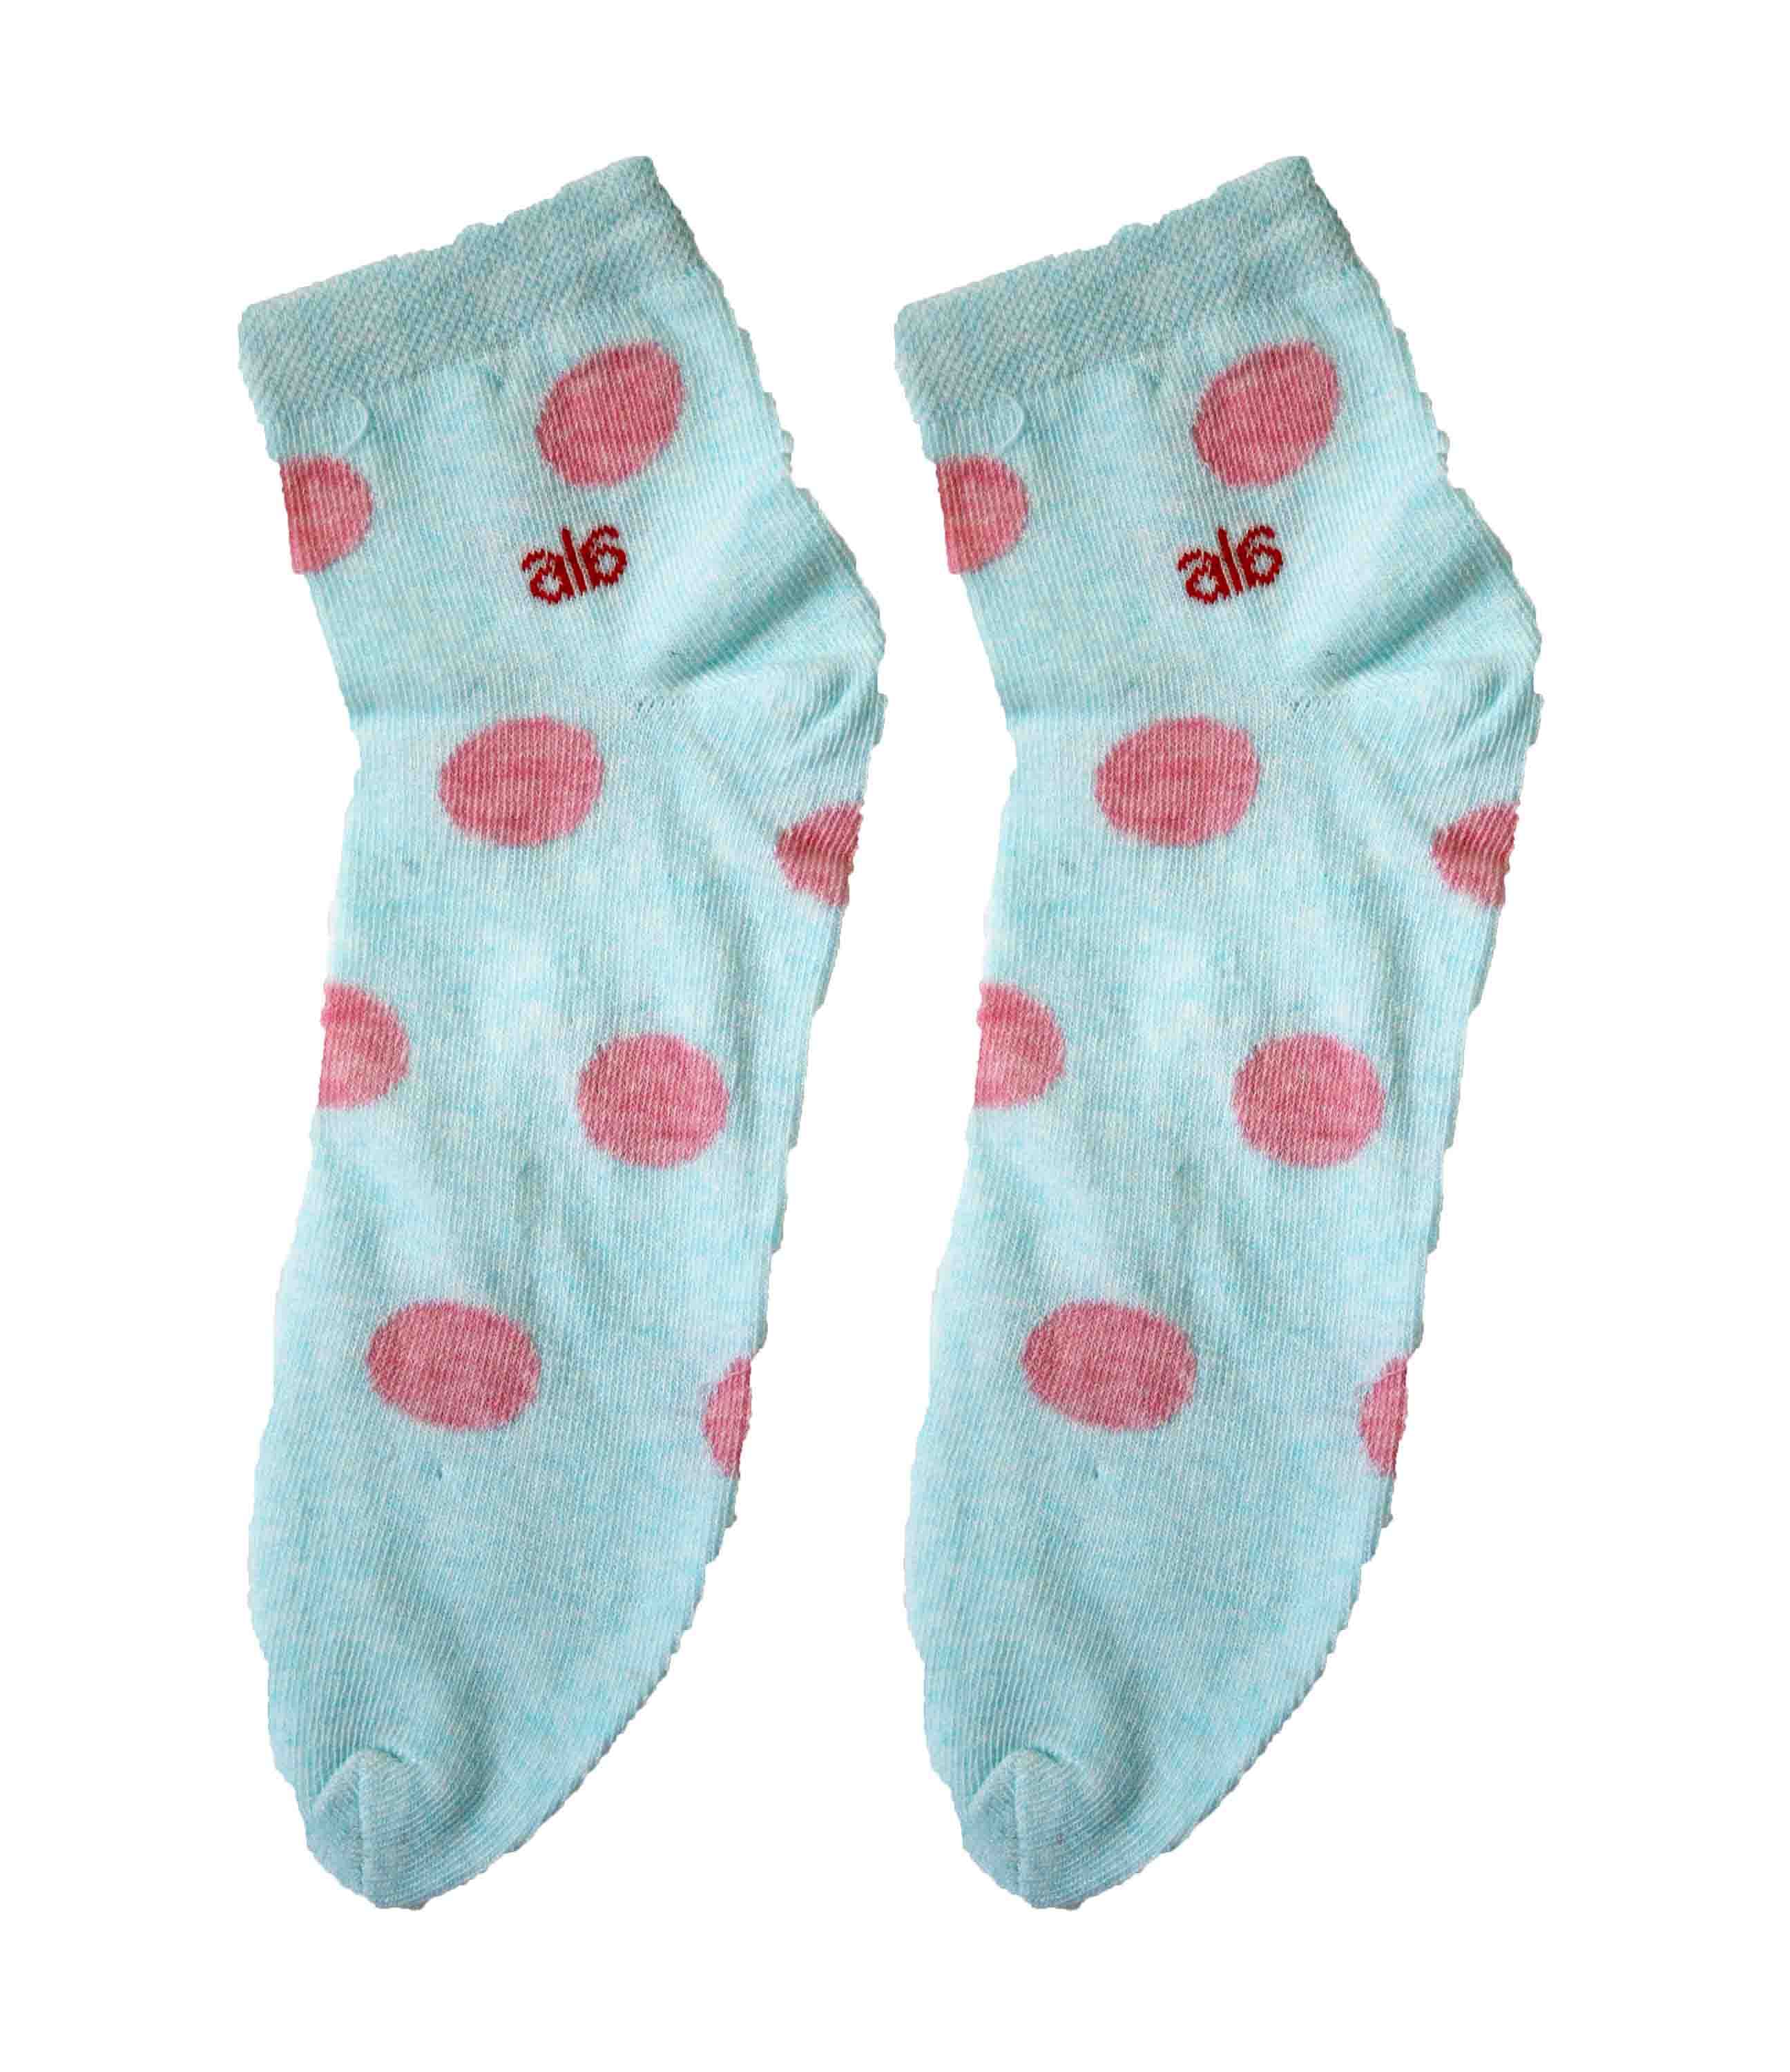 Ellie Wmn ankle Socks - Design-BG-Wmn-DESIGN-006-SBU